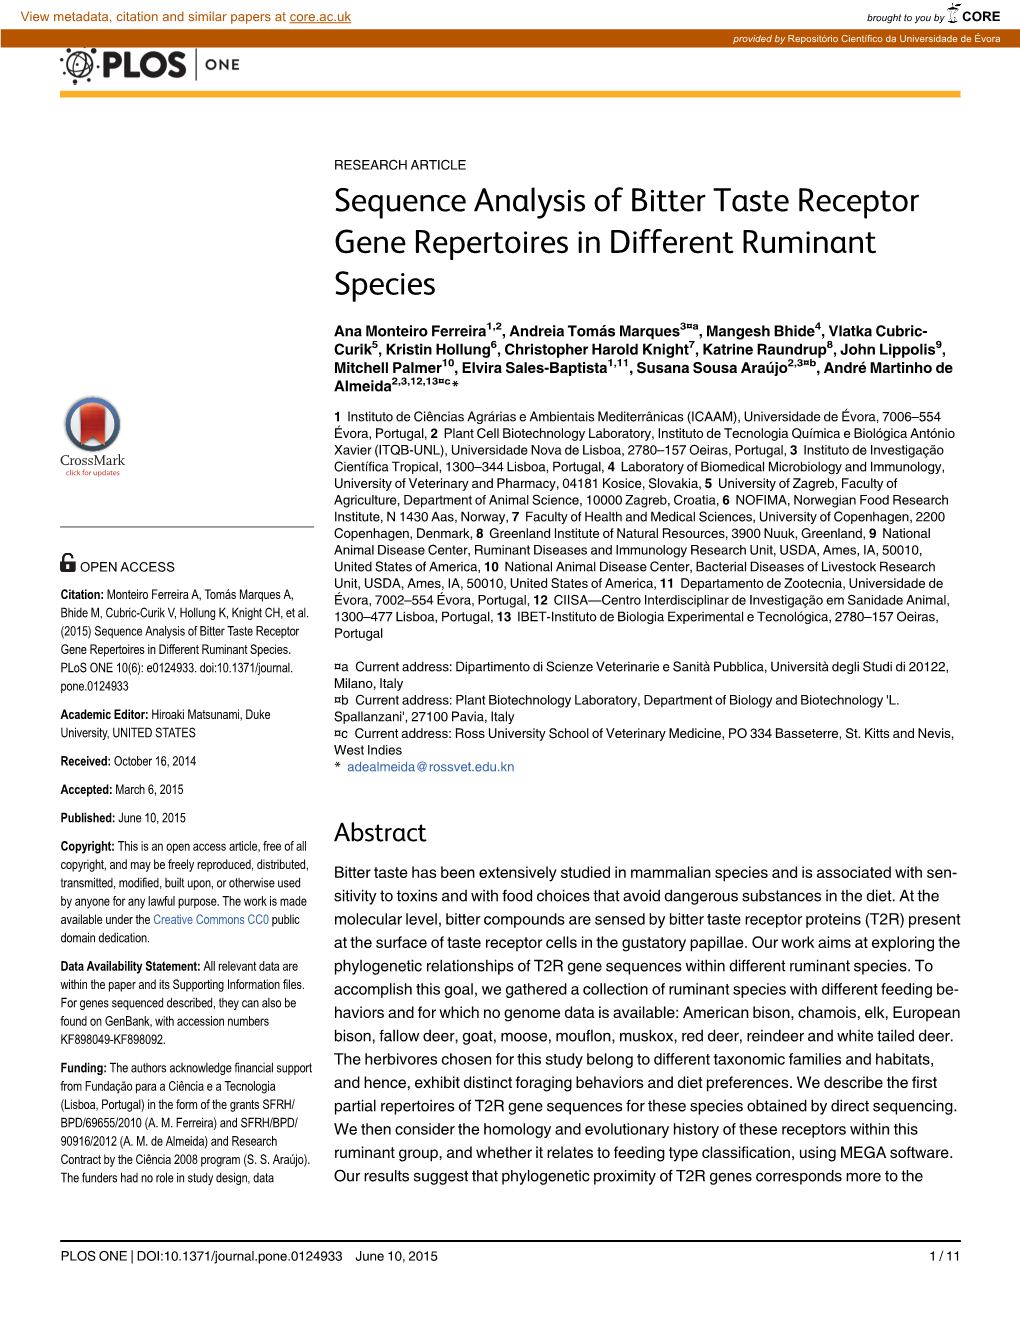 Sequence Analysis of Bitter Taste Receptor Gene Repertoires in Different Ruminant Species